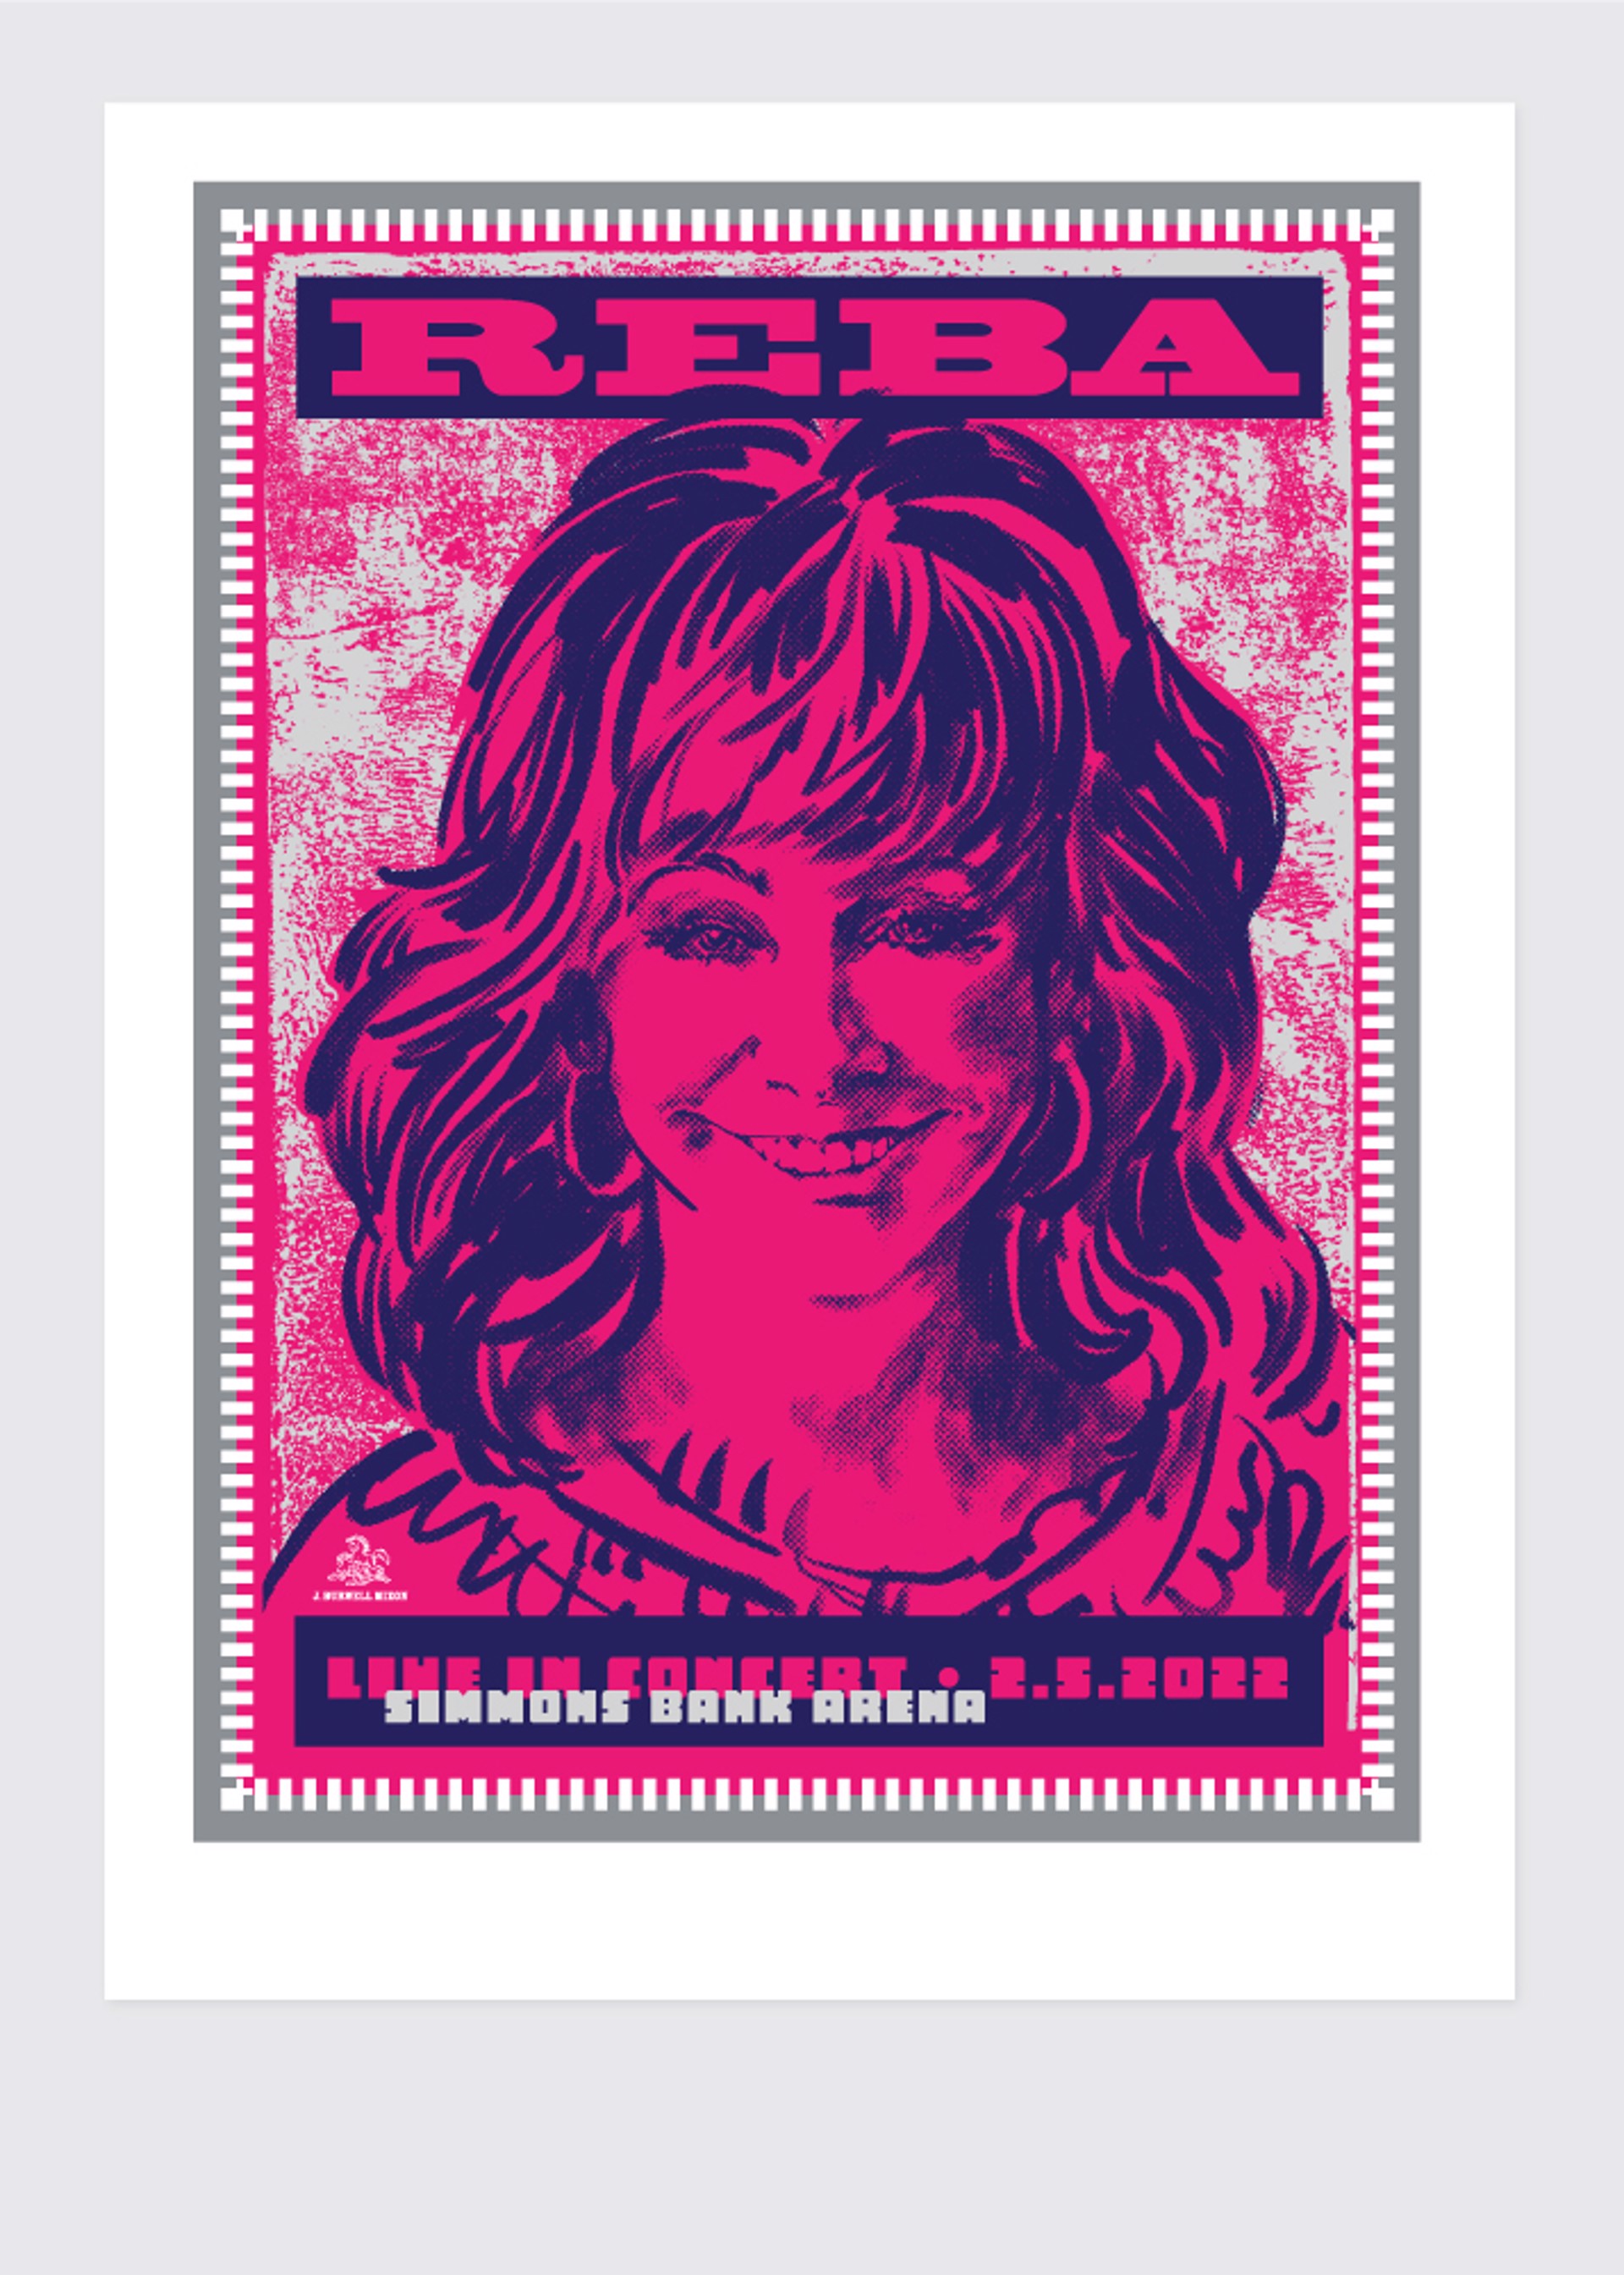 Reba Concert Poster by Jamie Burwell Mixon